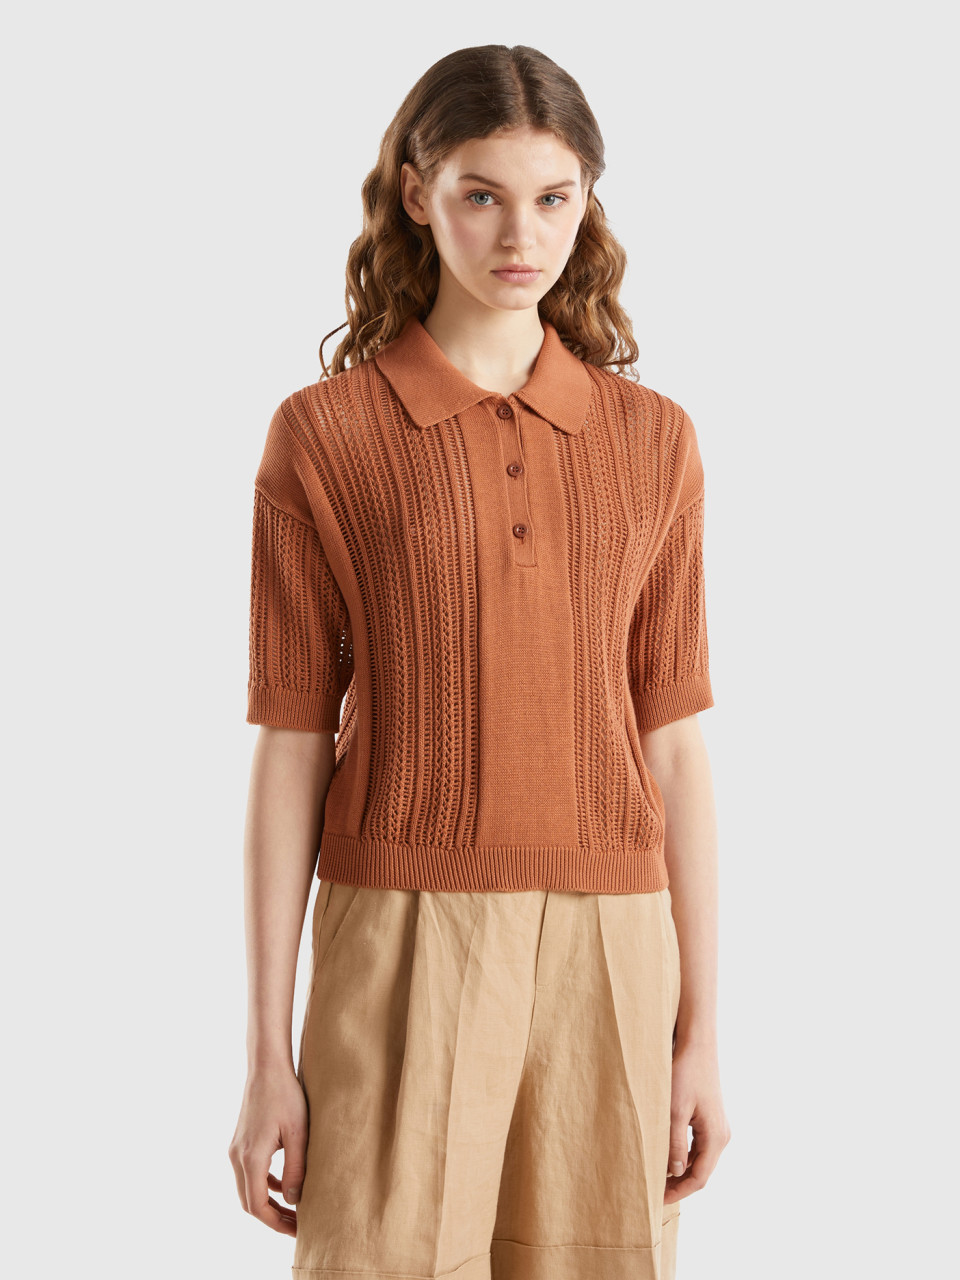 Benetton, Crochet Knit Polo Shirt, Brown, Women